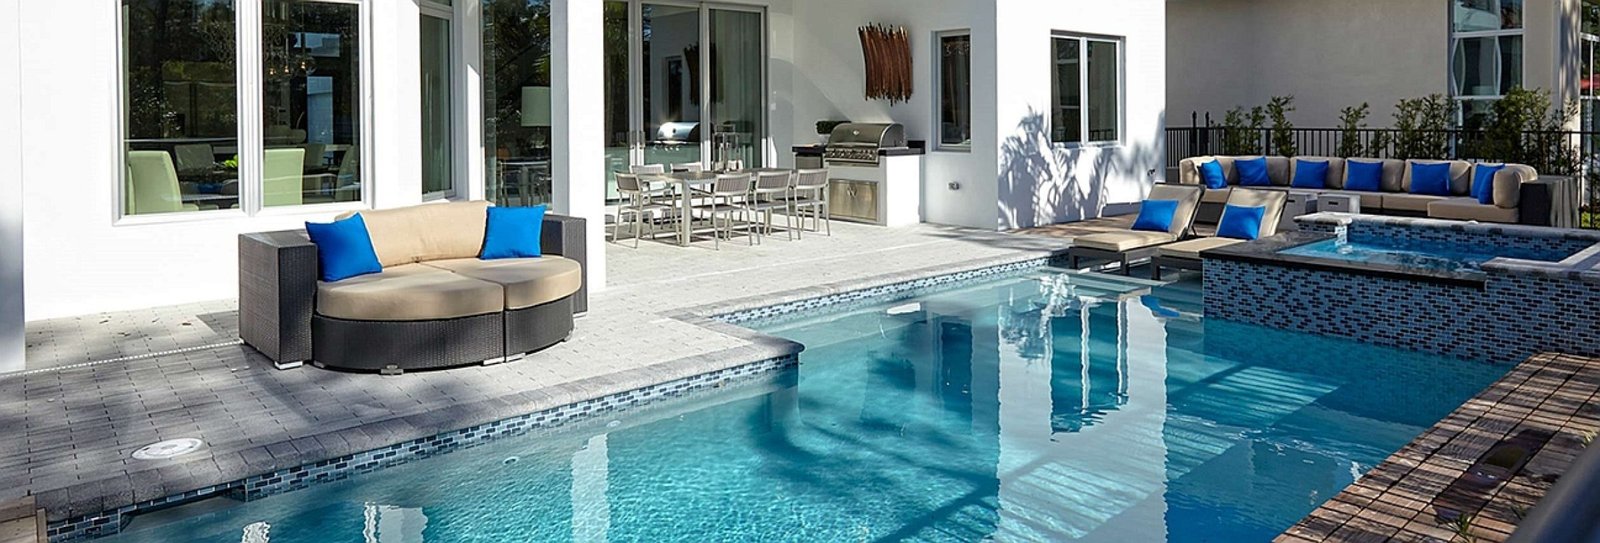 Luxury_Pool_Home_